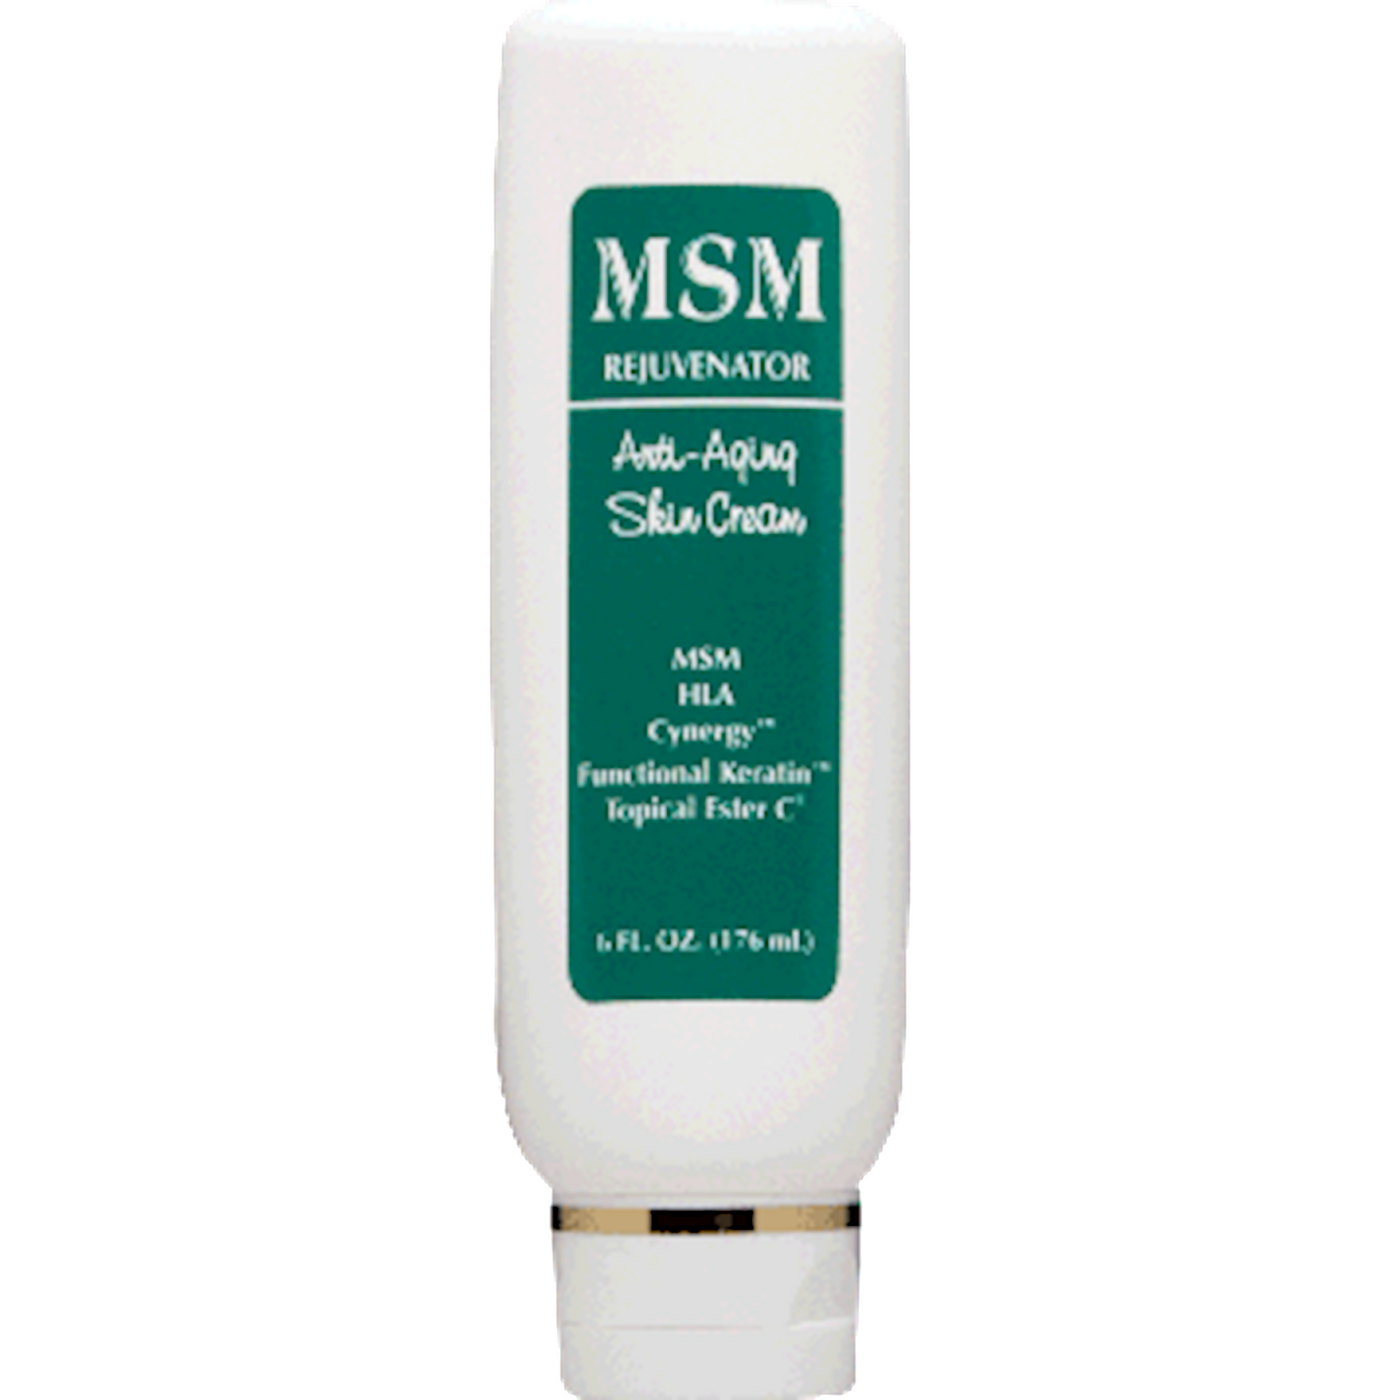 MSM Rejuvenator Anti-Aging Skin Crm  Curated Wellness